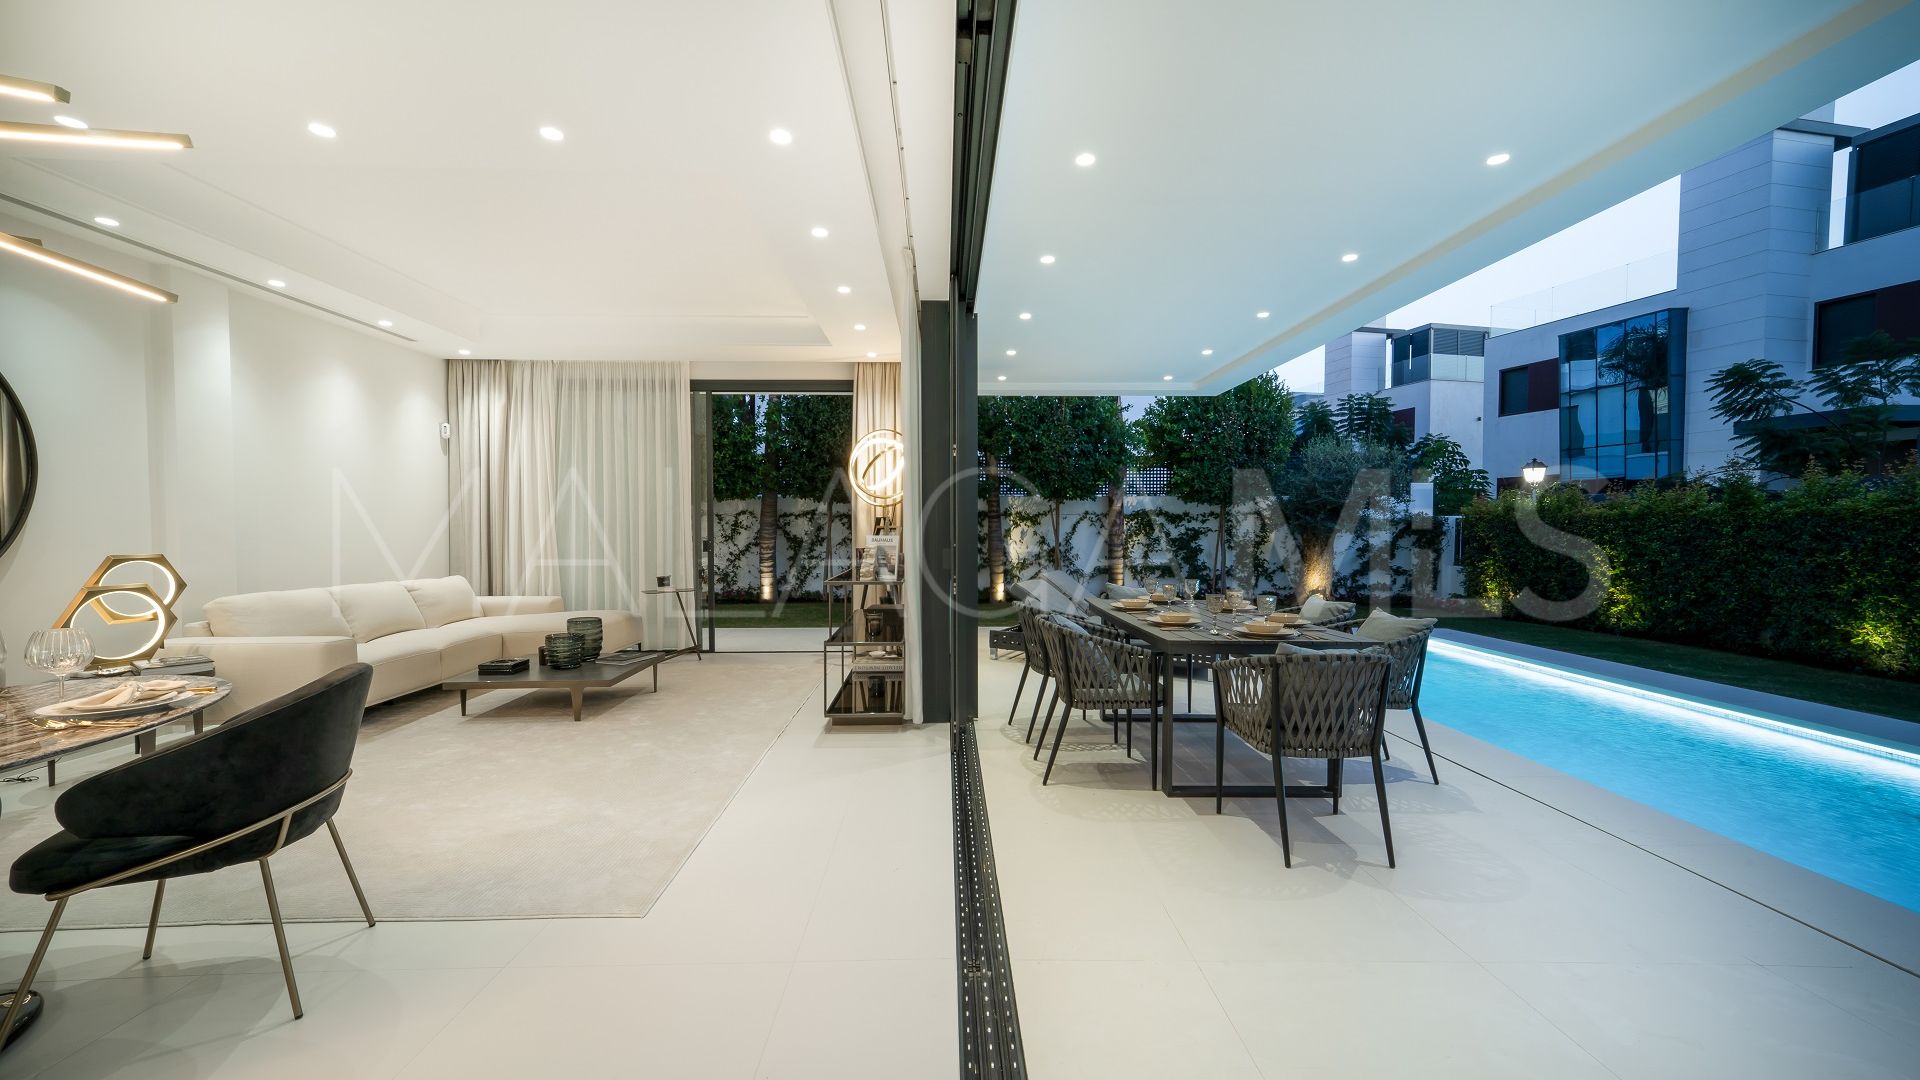 Villa with 3 bedrooms for sale in Rio Verde Playa